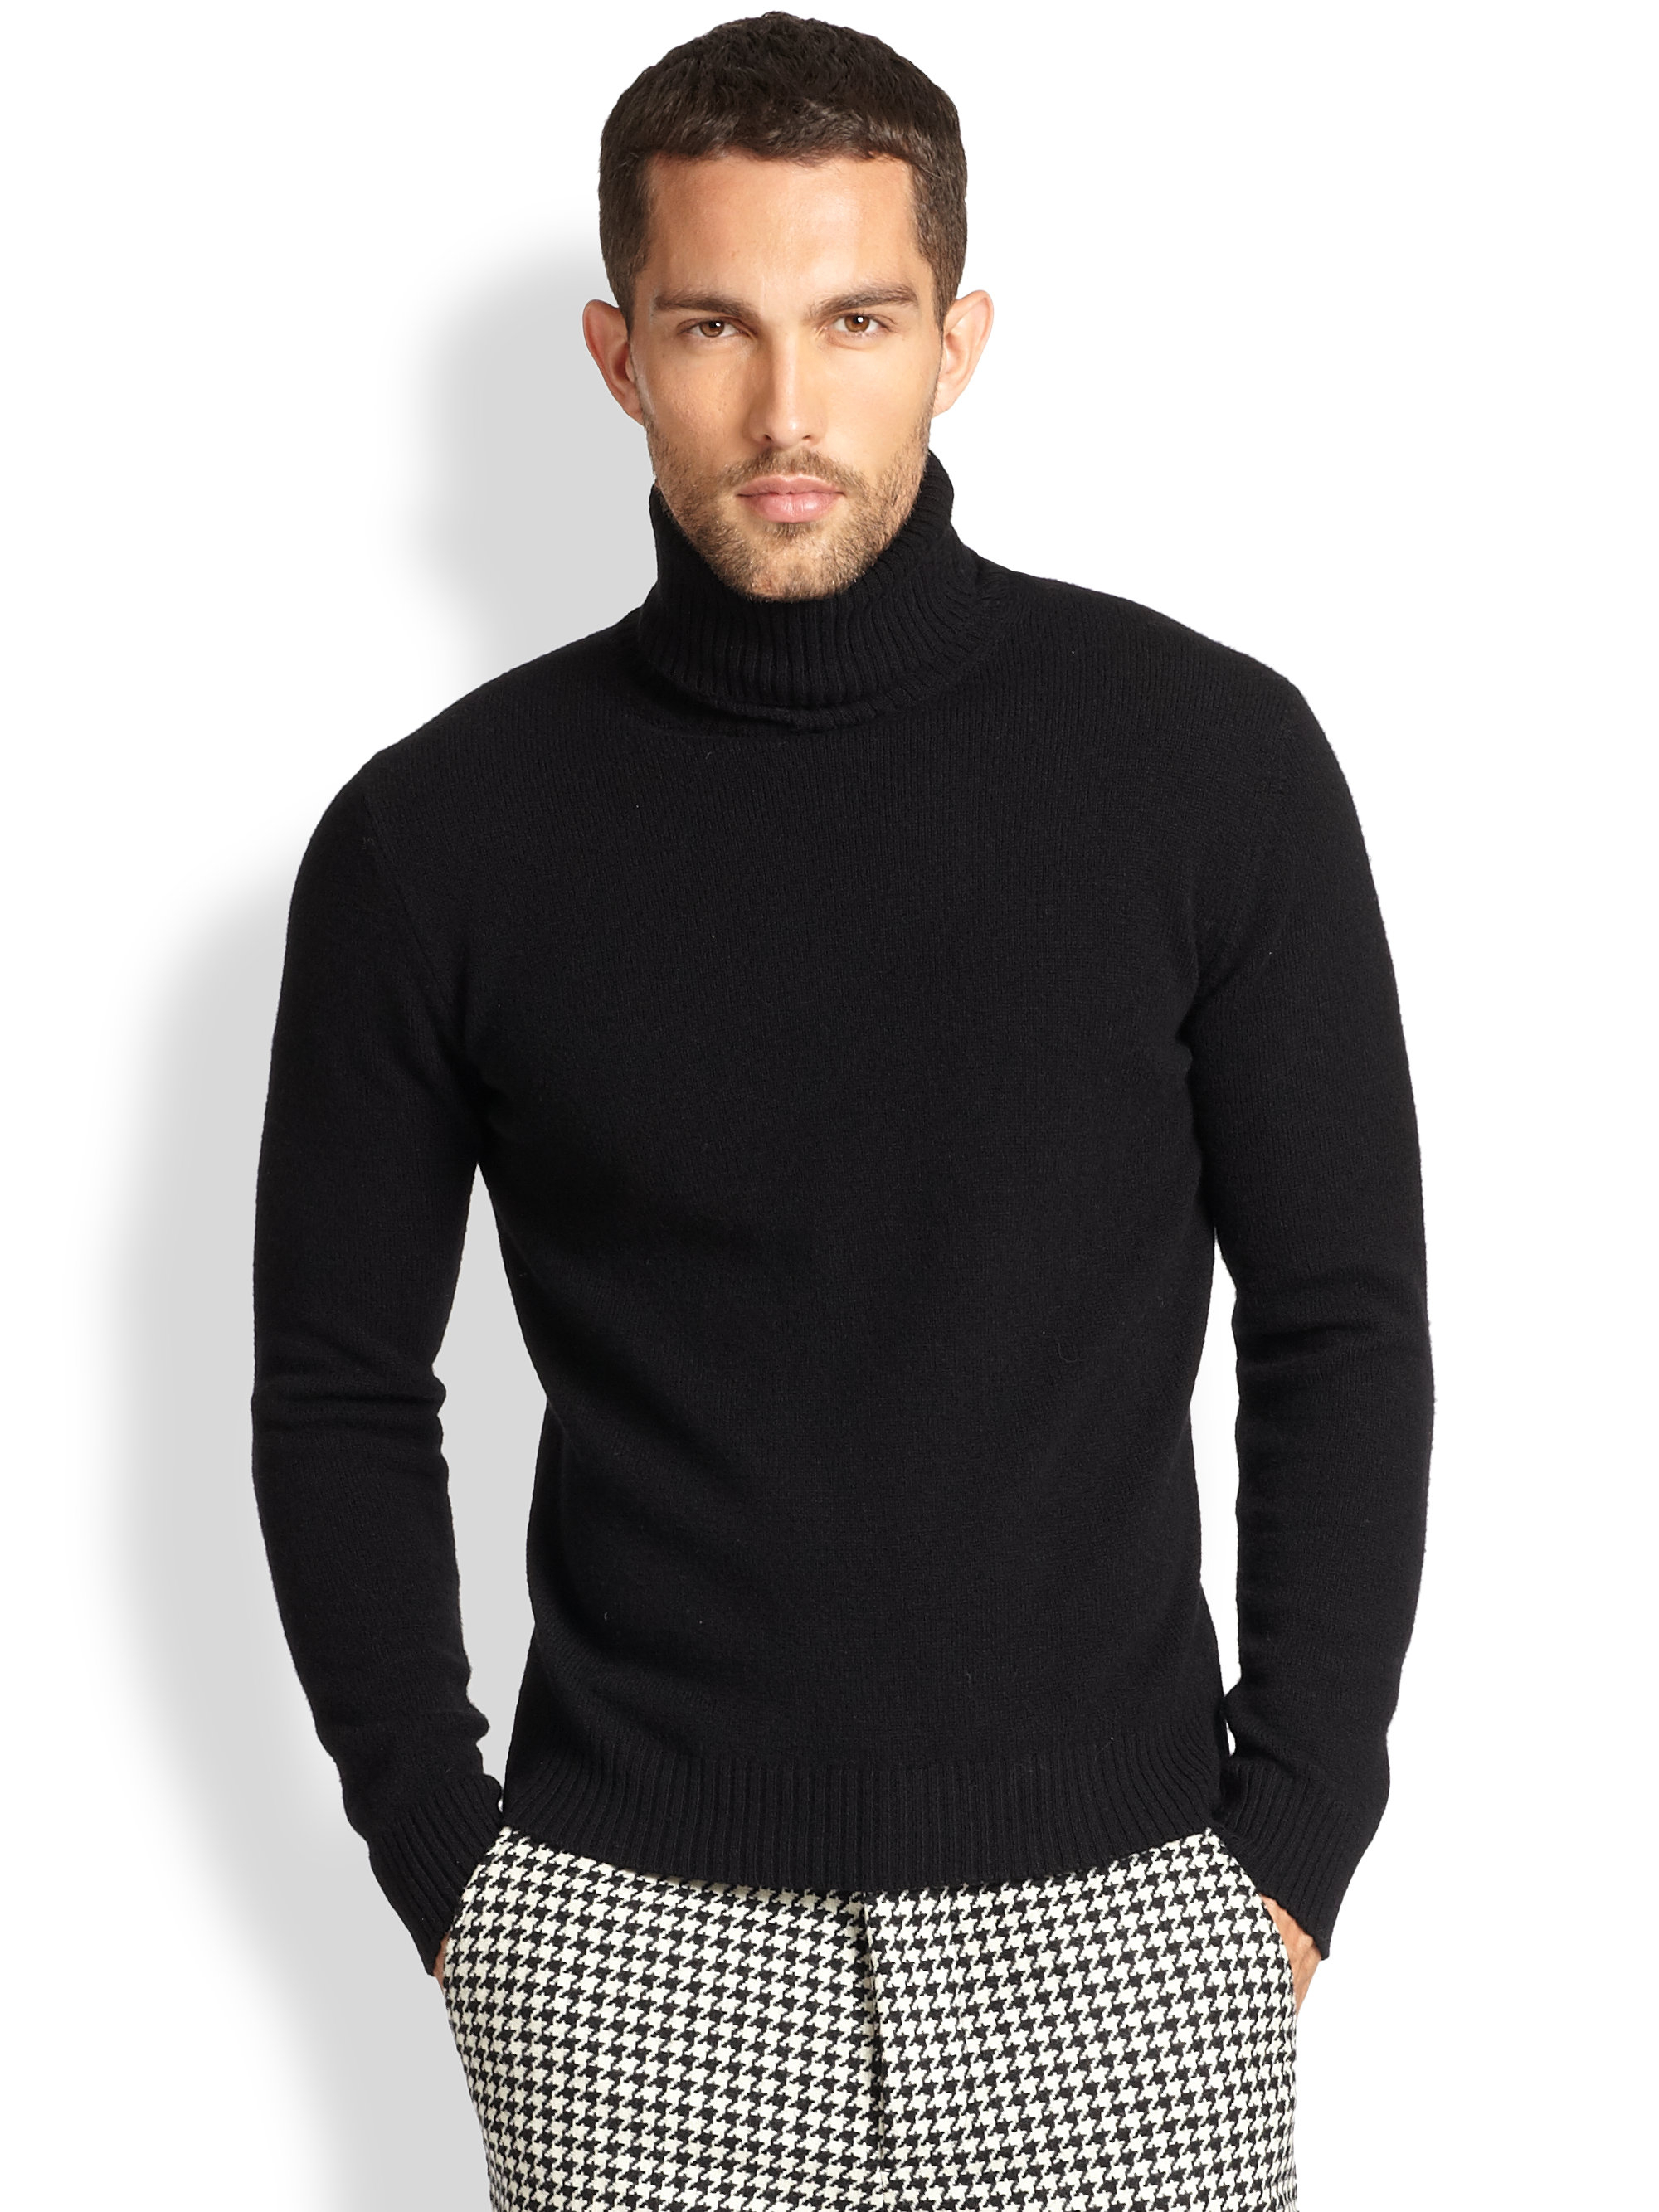 AMI Wool Turtleneck Sweater in Black for Men - Lyst